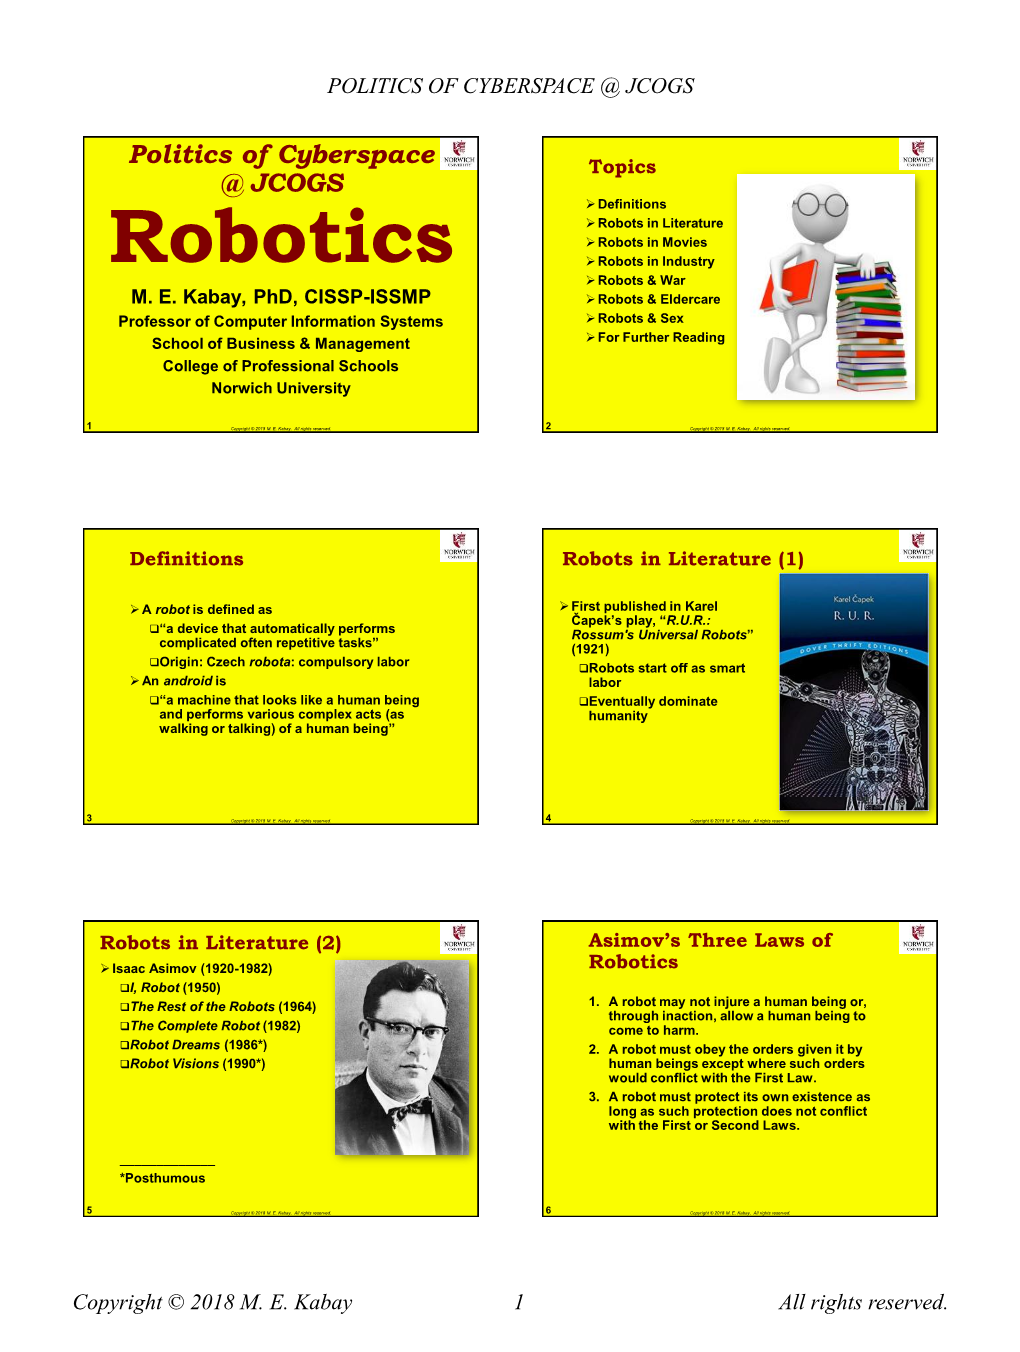 Robotics ➢ Robots in Industry ➢ Robots & War M